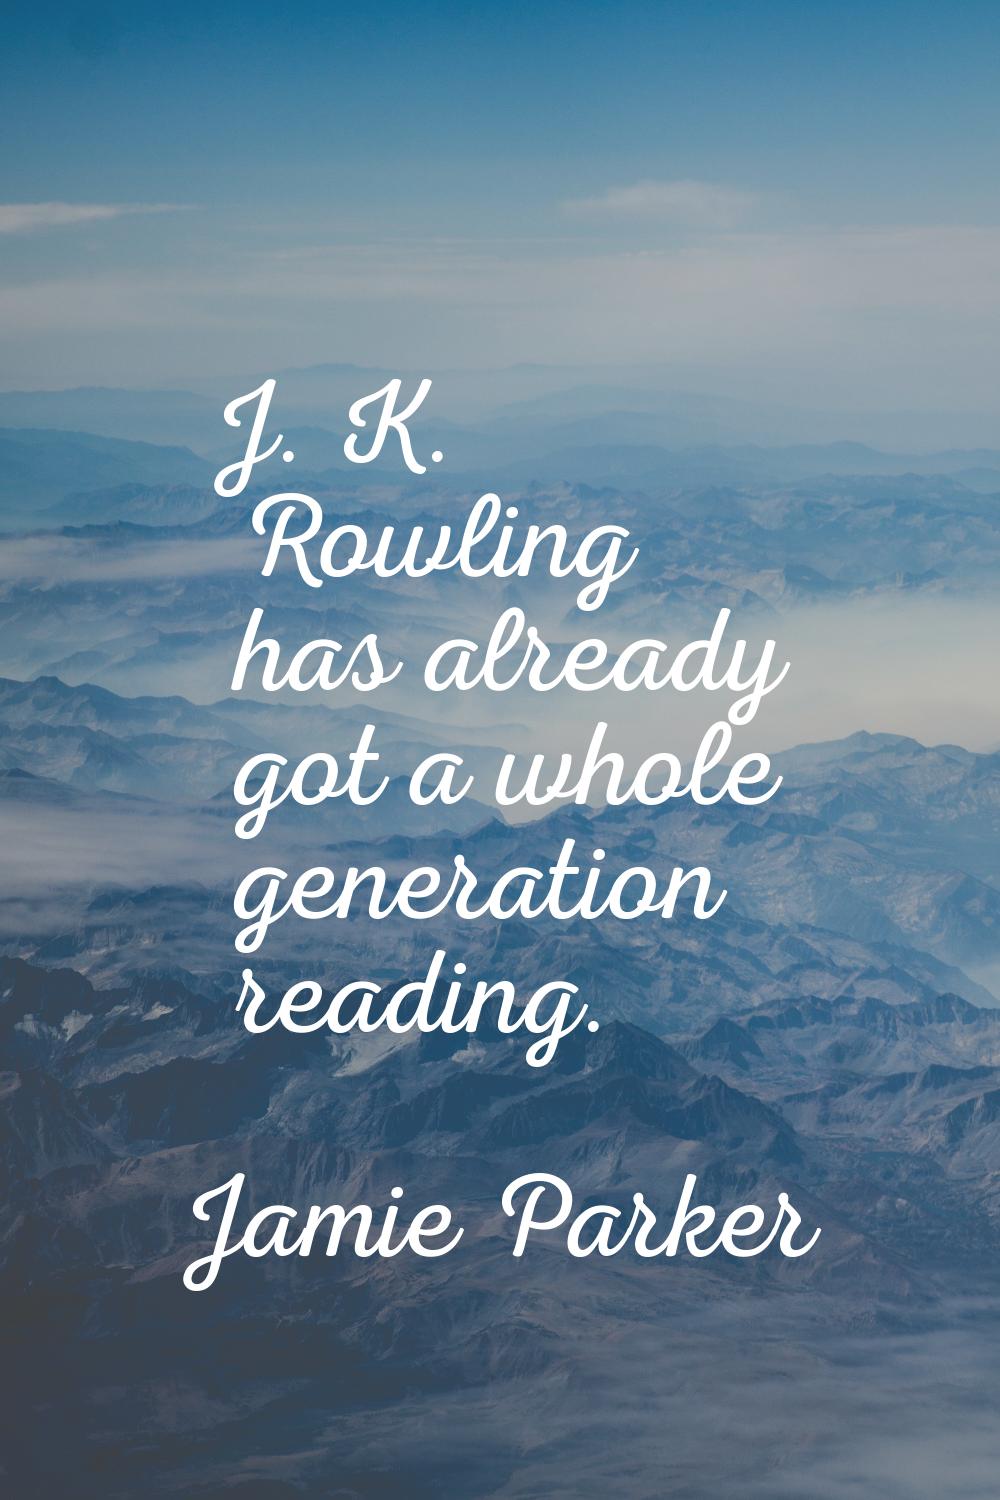 J. K. Rowling has already got a whole generation reading.